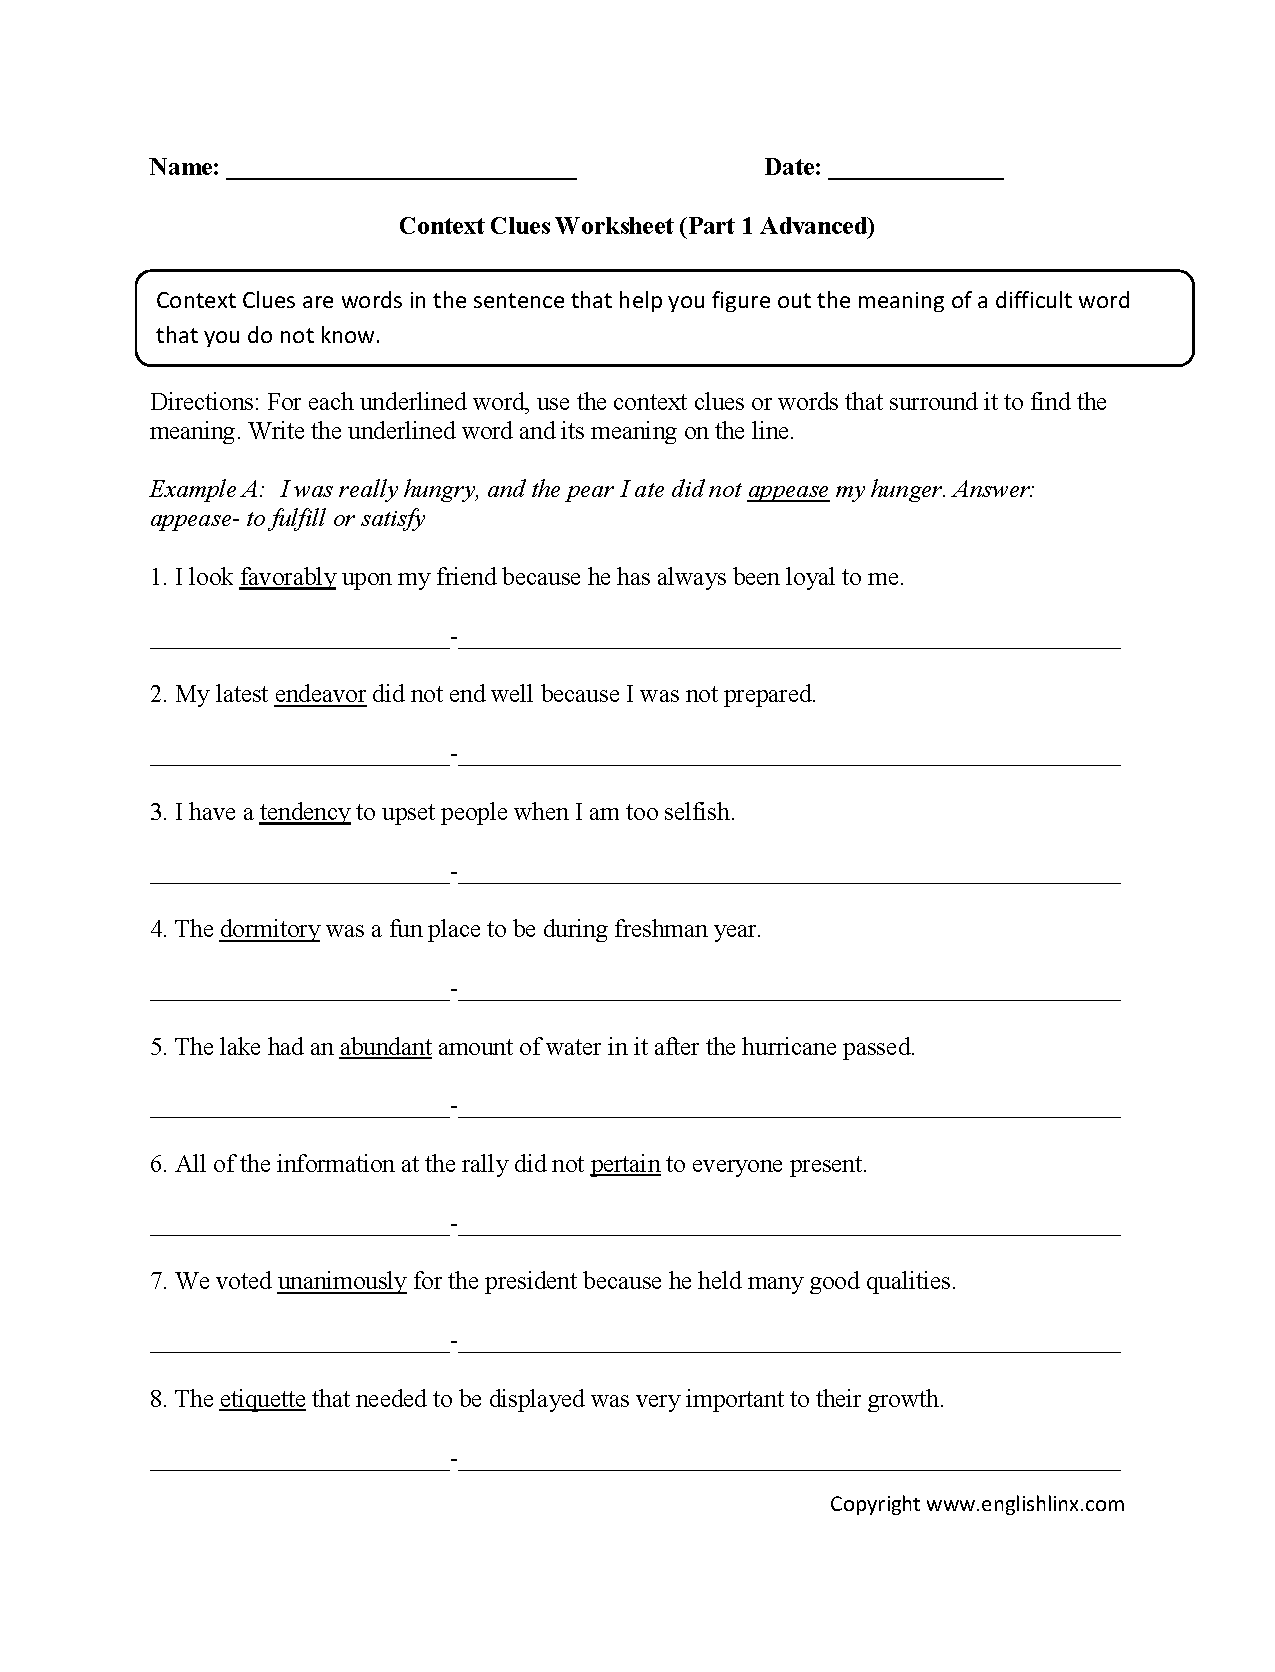 Context Clues Worksheets Advanced Part 1